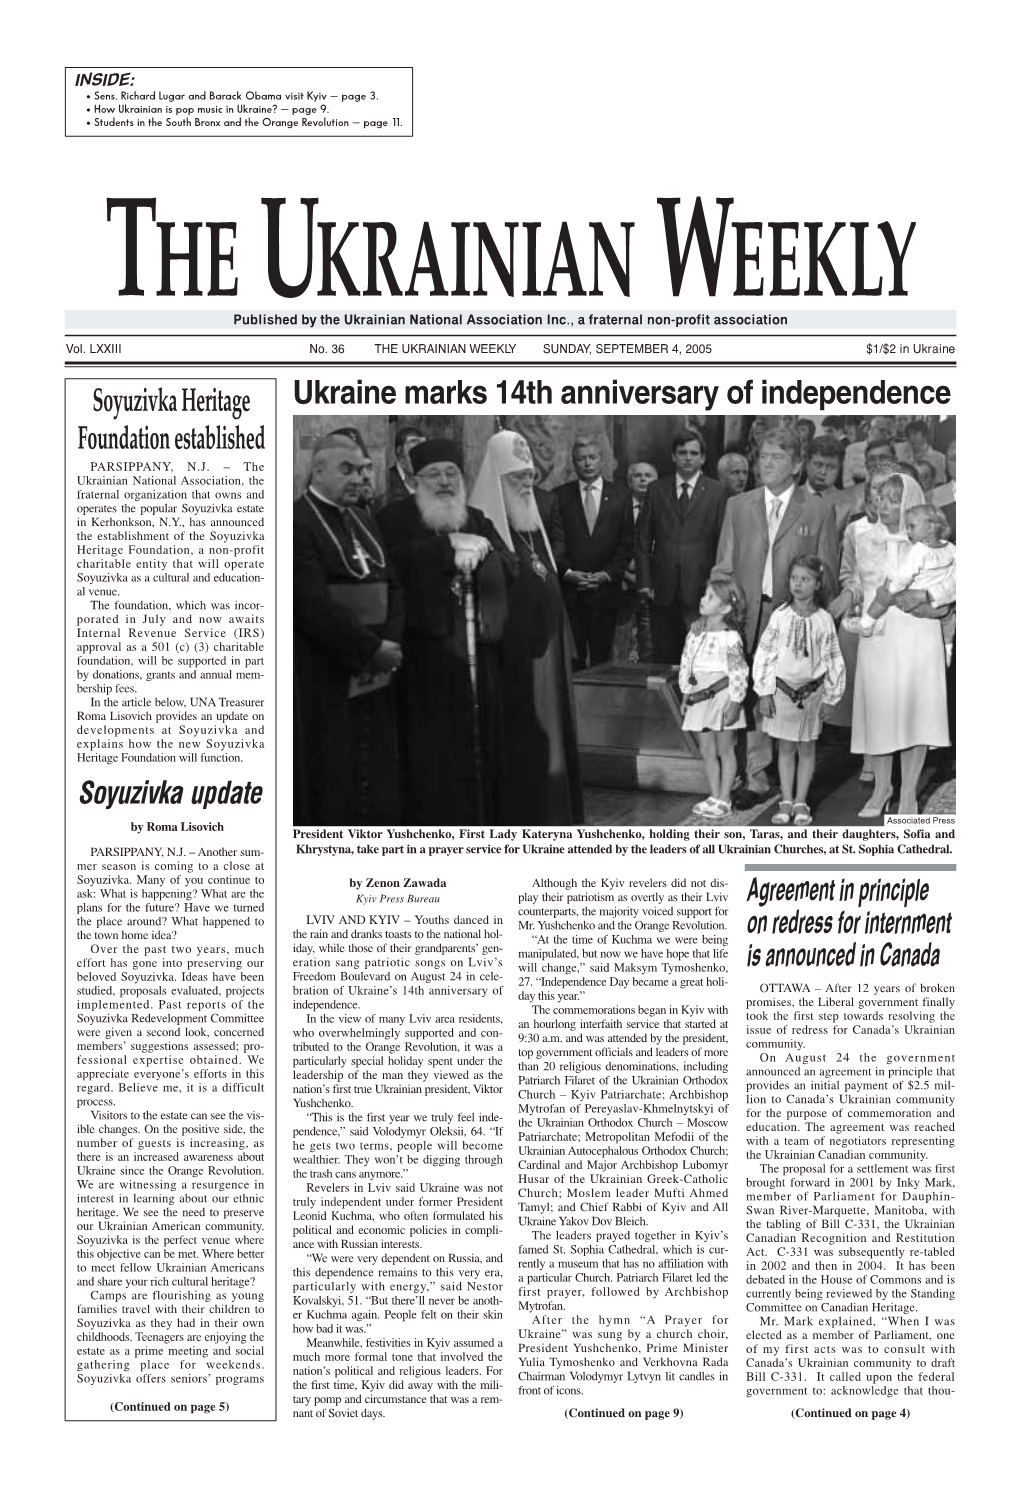 The Ukrainian Weekly 2005, No.36